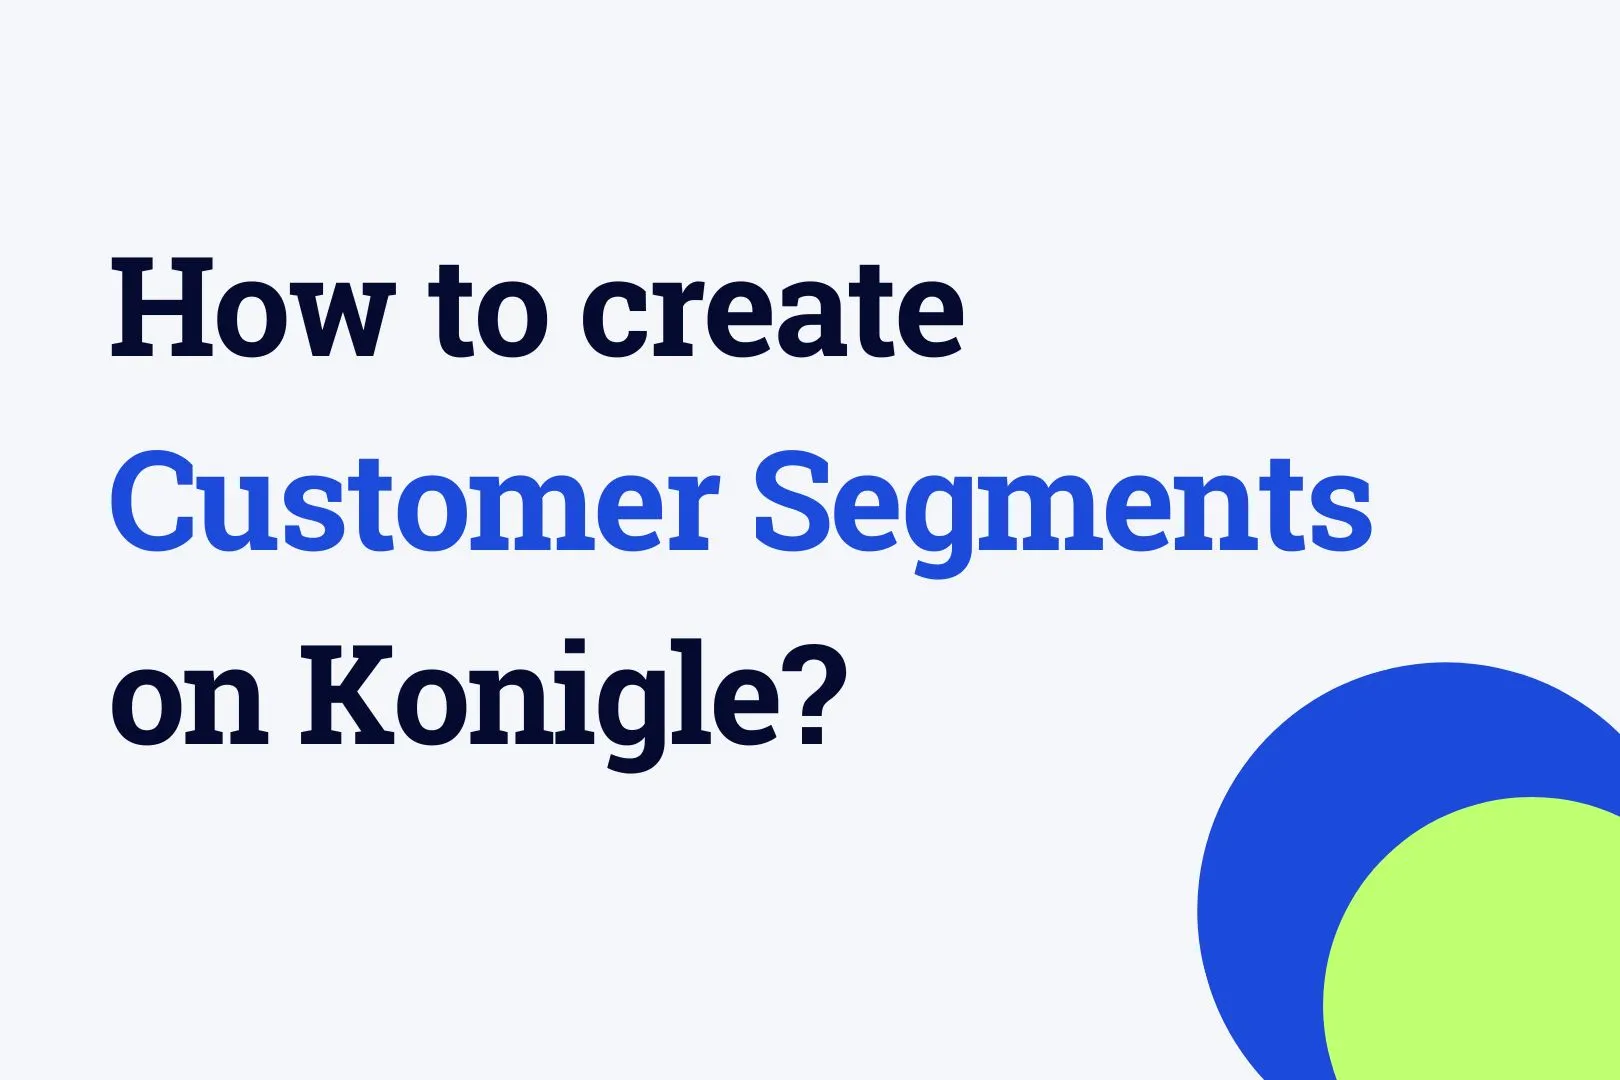 How to create Customer Segments on Konigle?